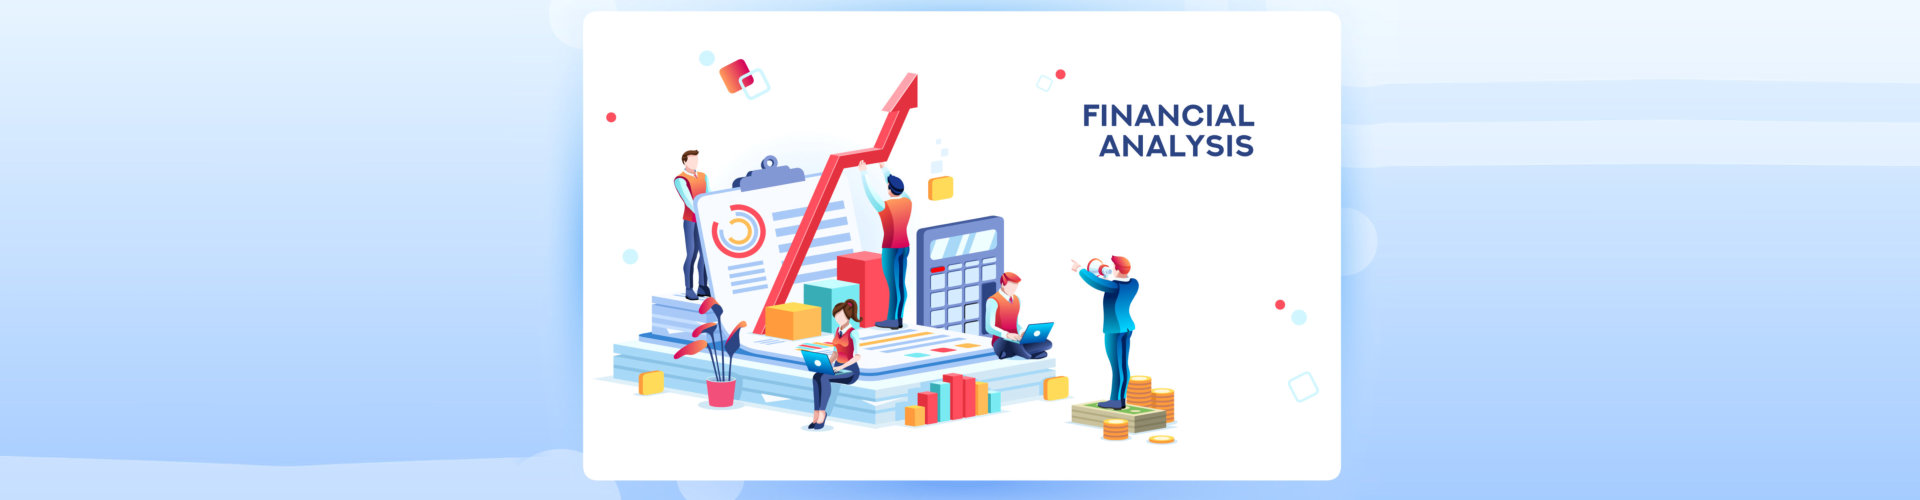 financial analysis concept